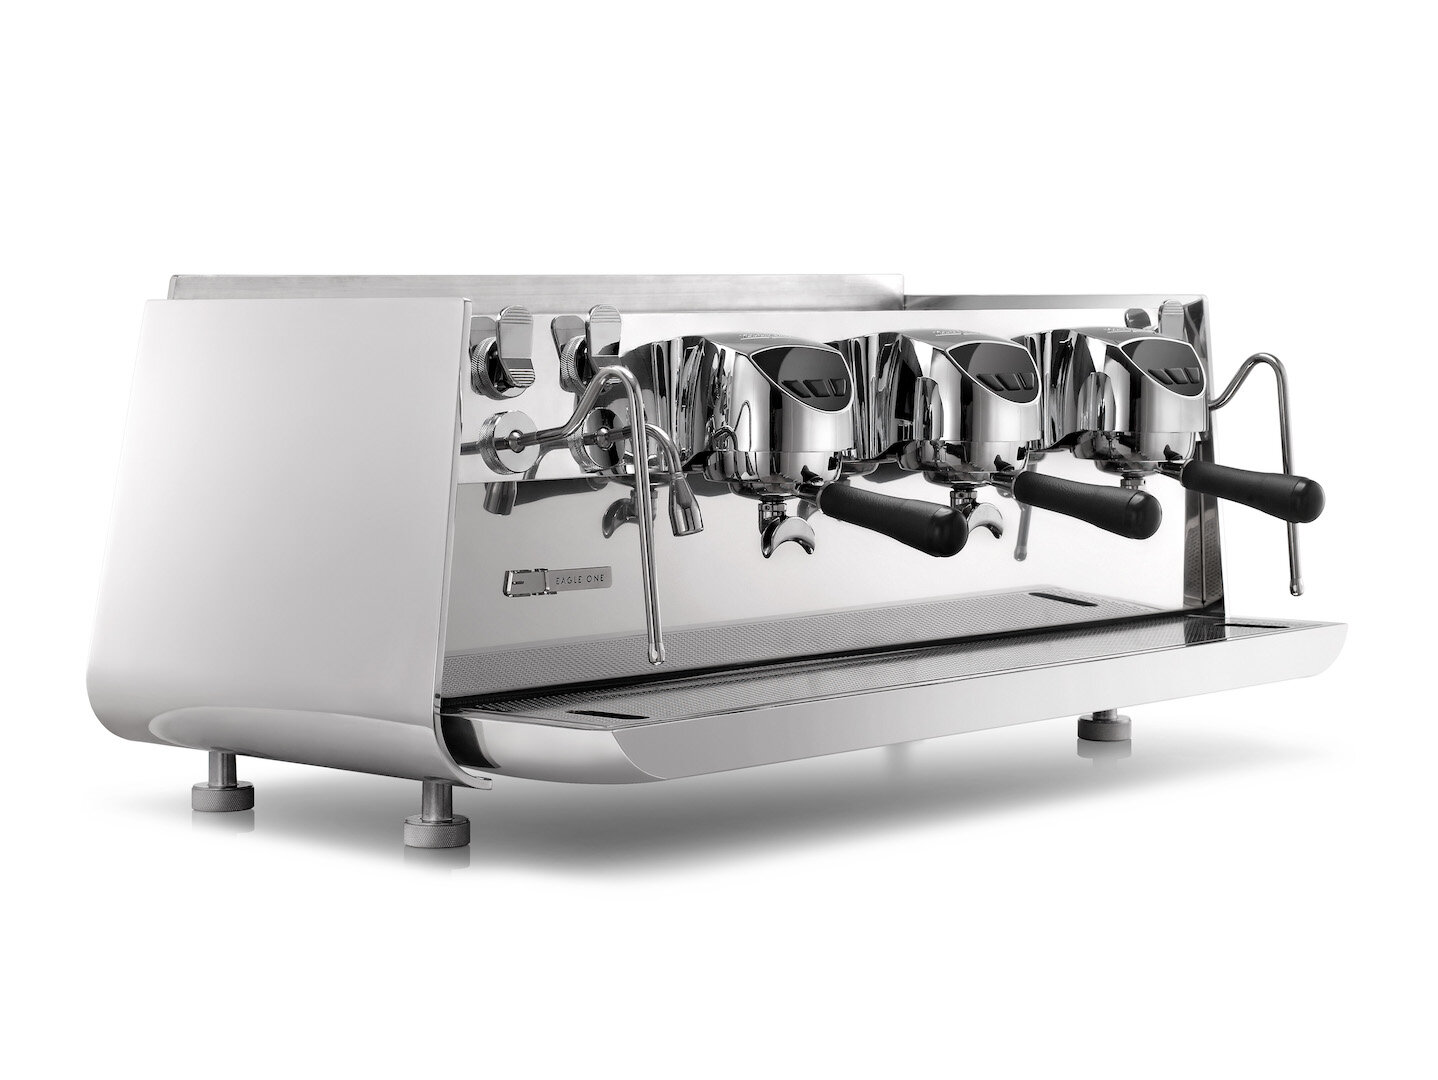 Eagle One Espressomaschine Victoria Arduino VA espresso machines Berlin Vertrieb Premium _shinychrome_34front.jpg